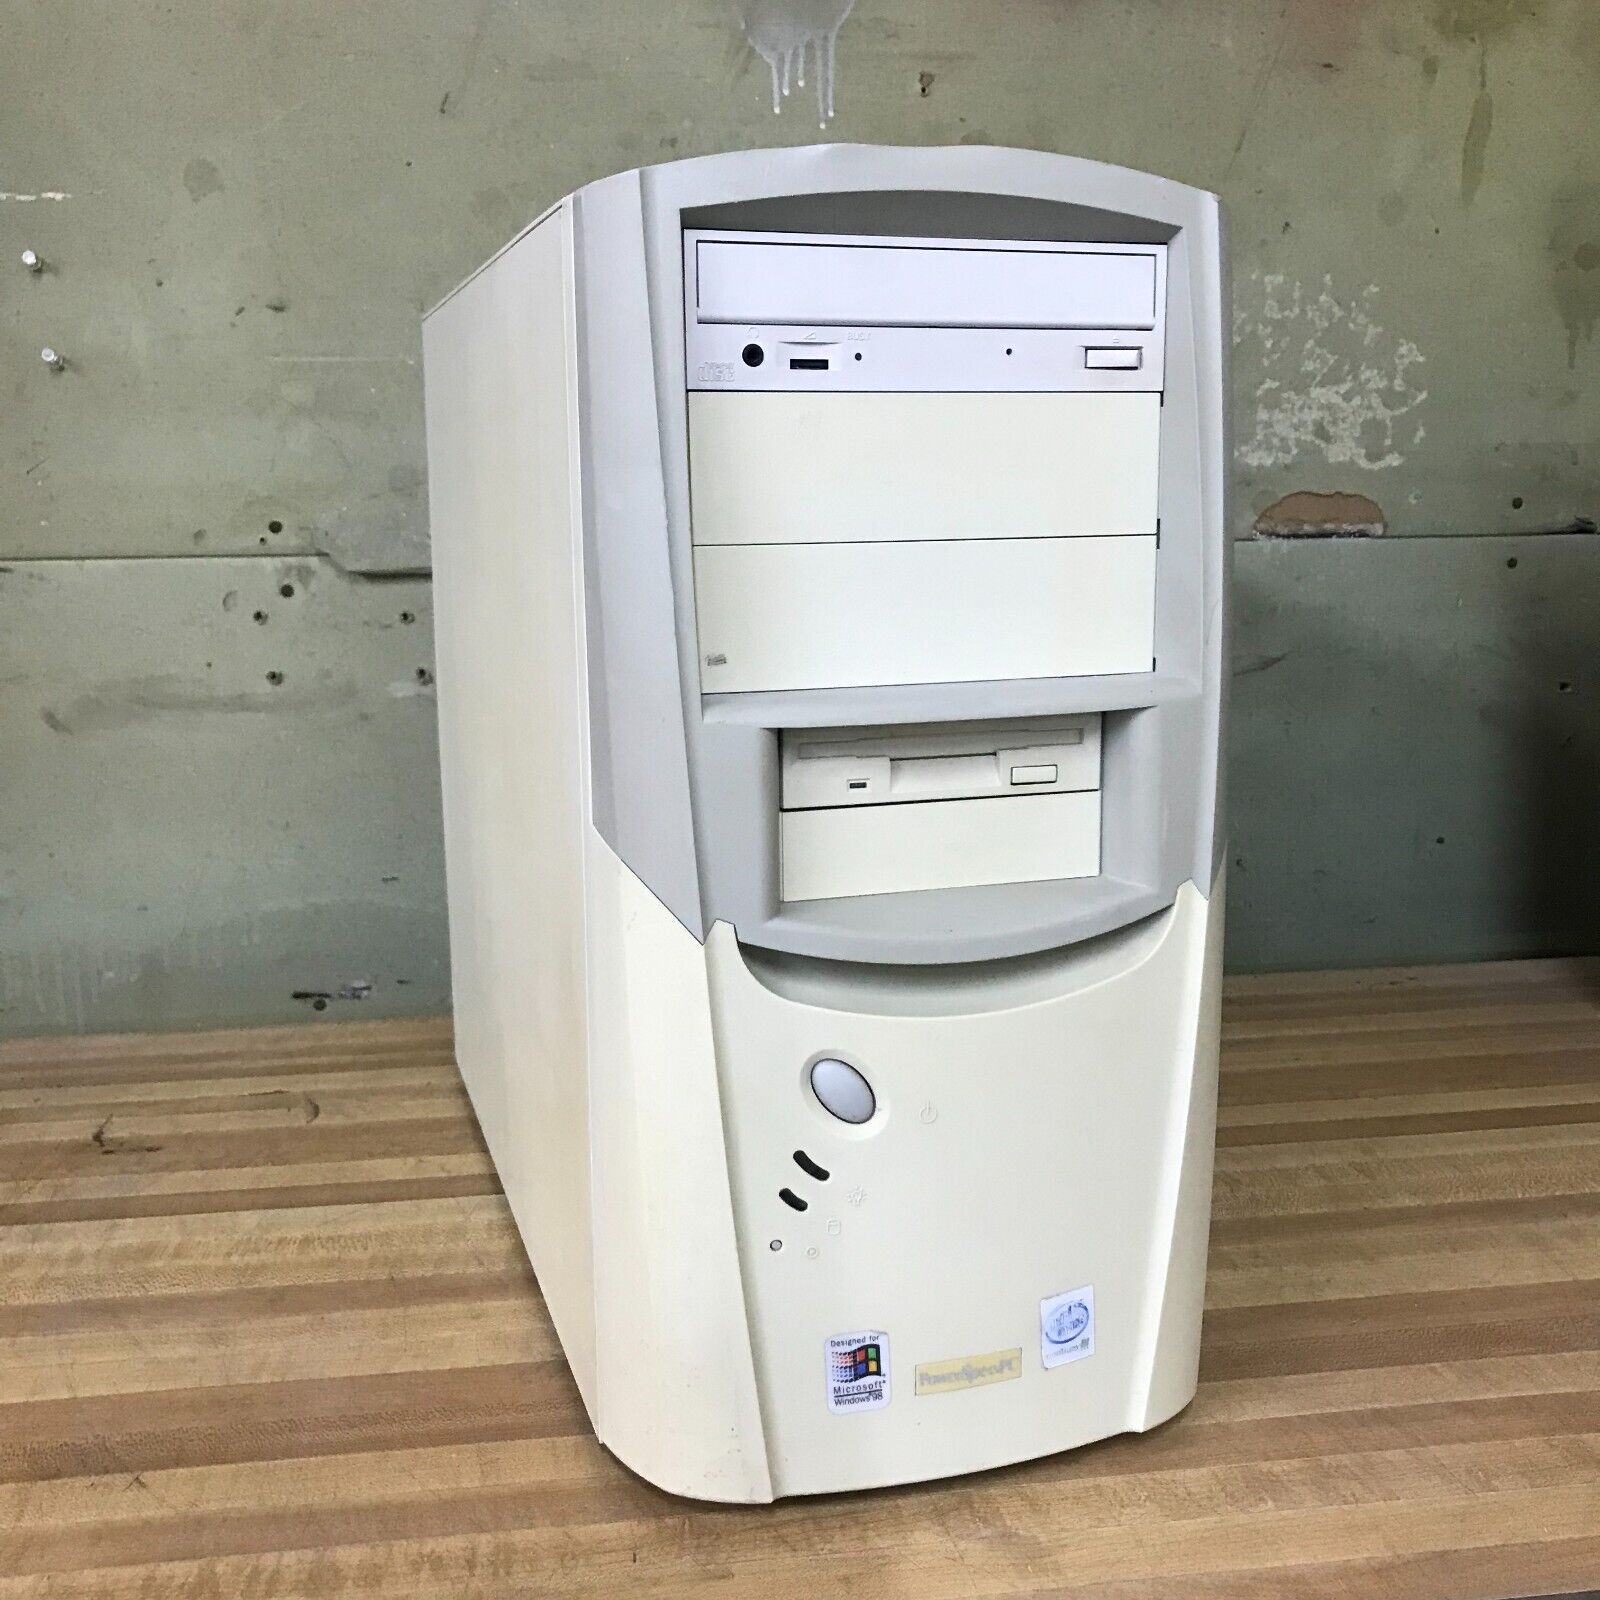 PowerSpec Desktop - Pentium III 600MHz 128MB RAM (No HDD) Retro Gaming PC